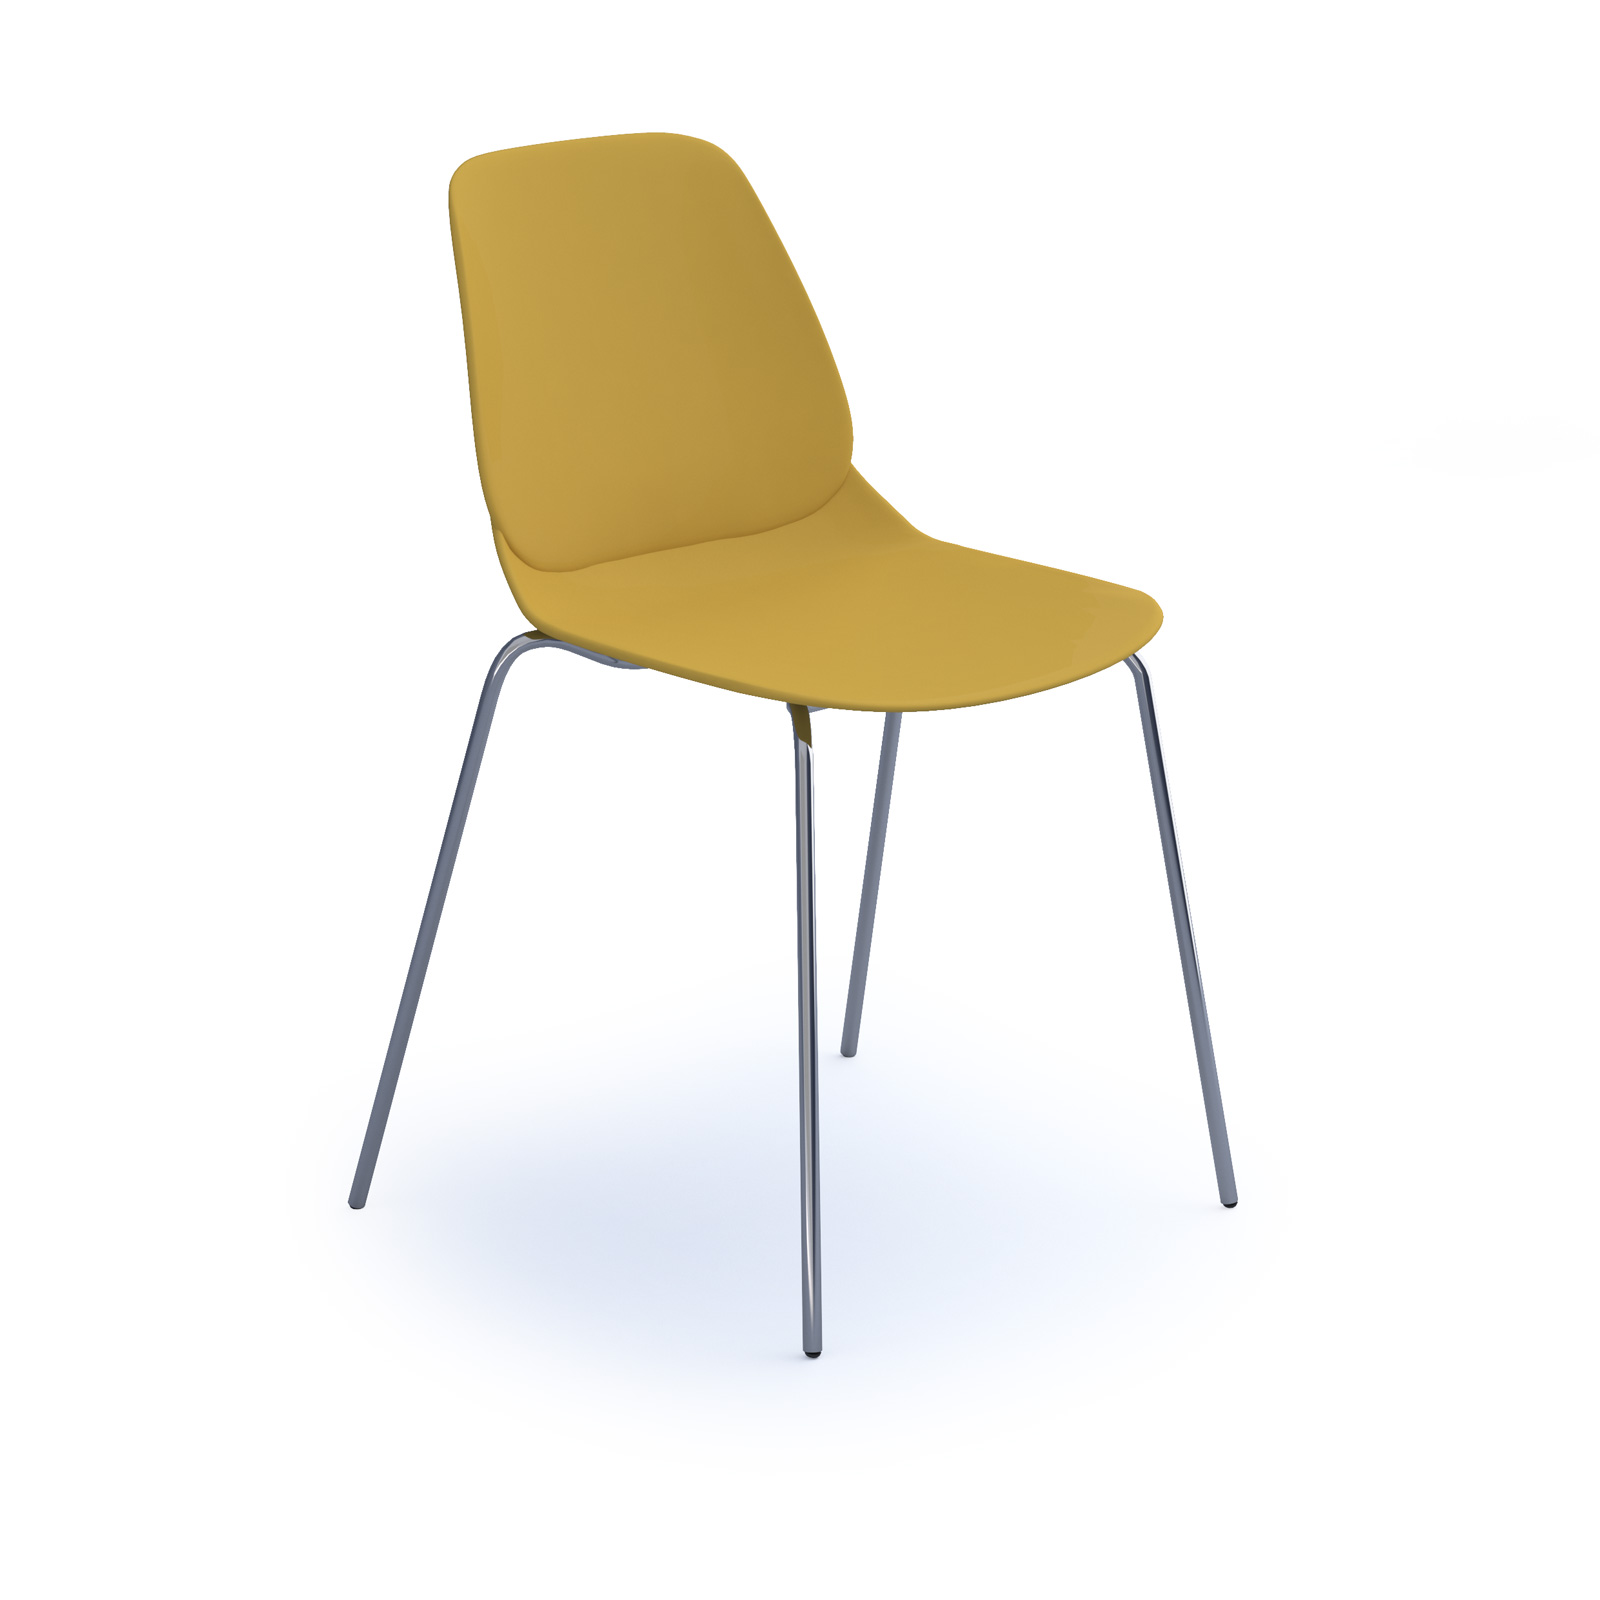 Strut multi-purpose chair with chrome 4 leg frame